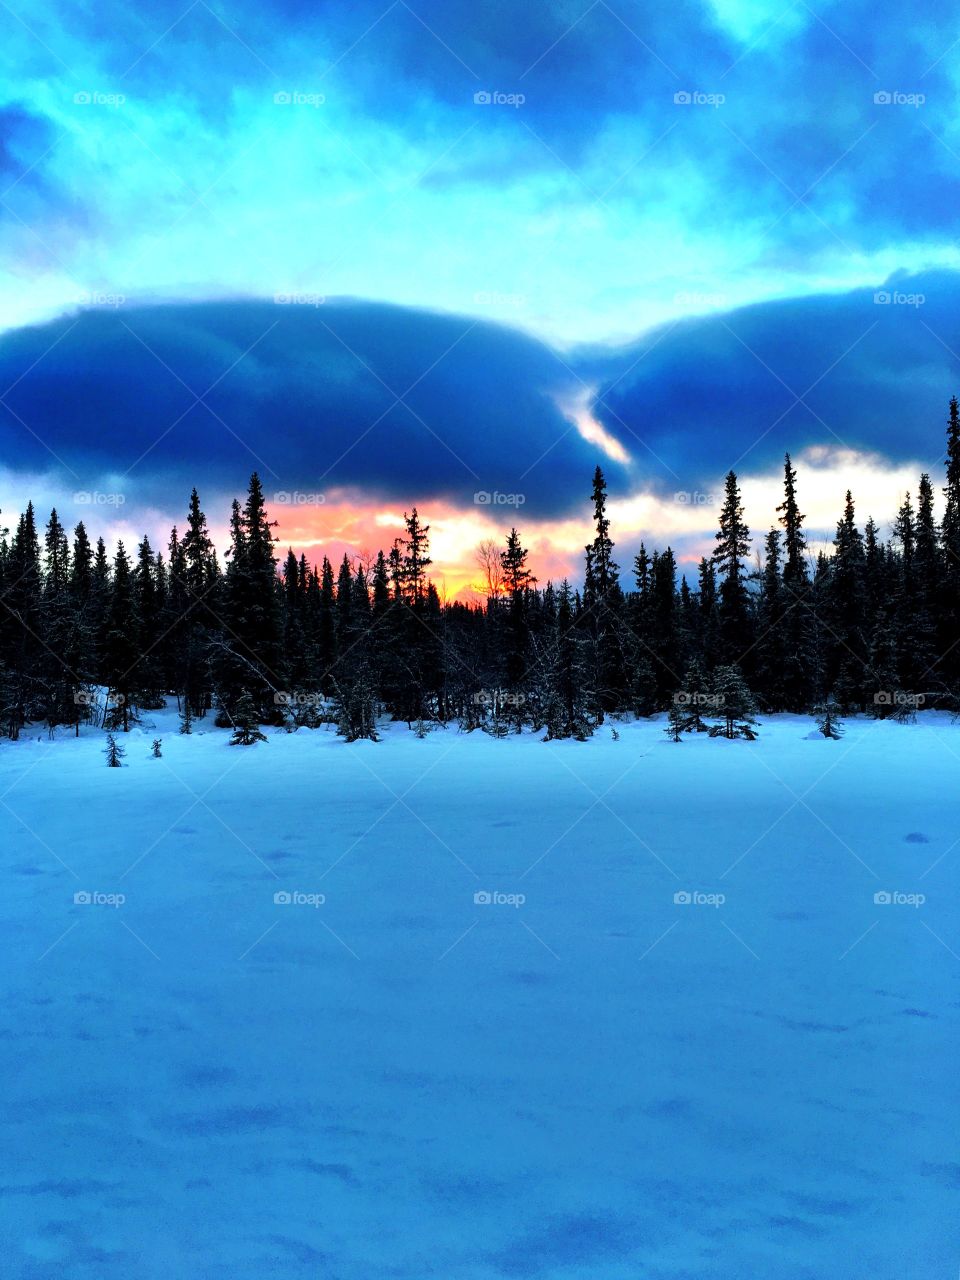 Sunset in snowy landscape 